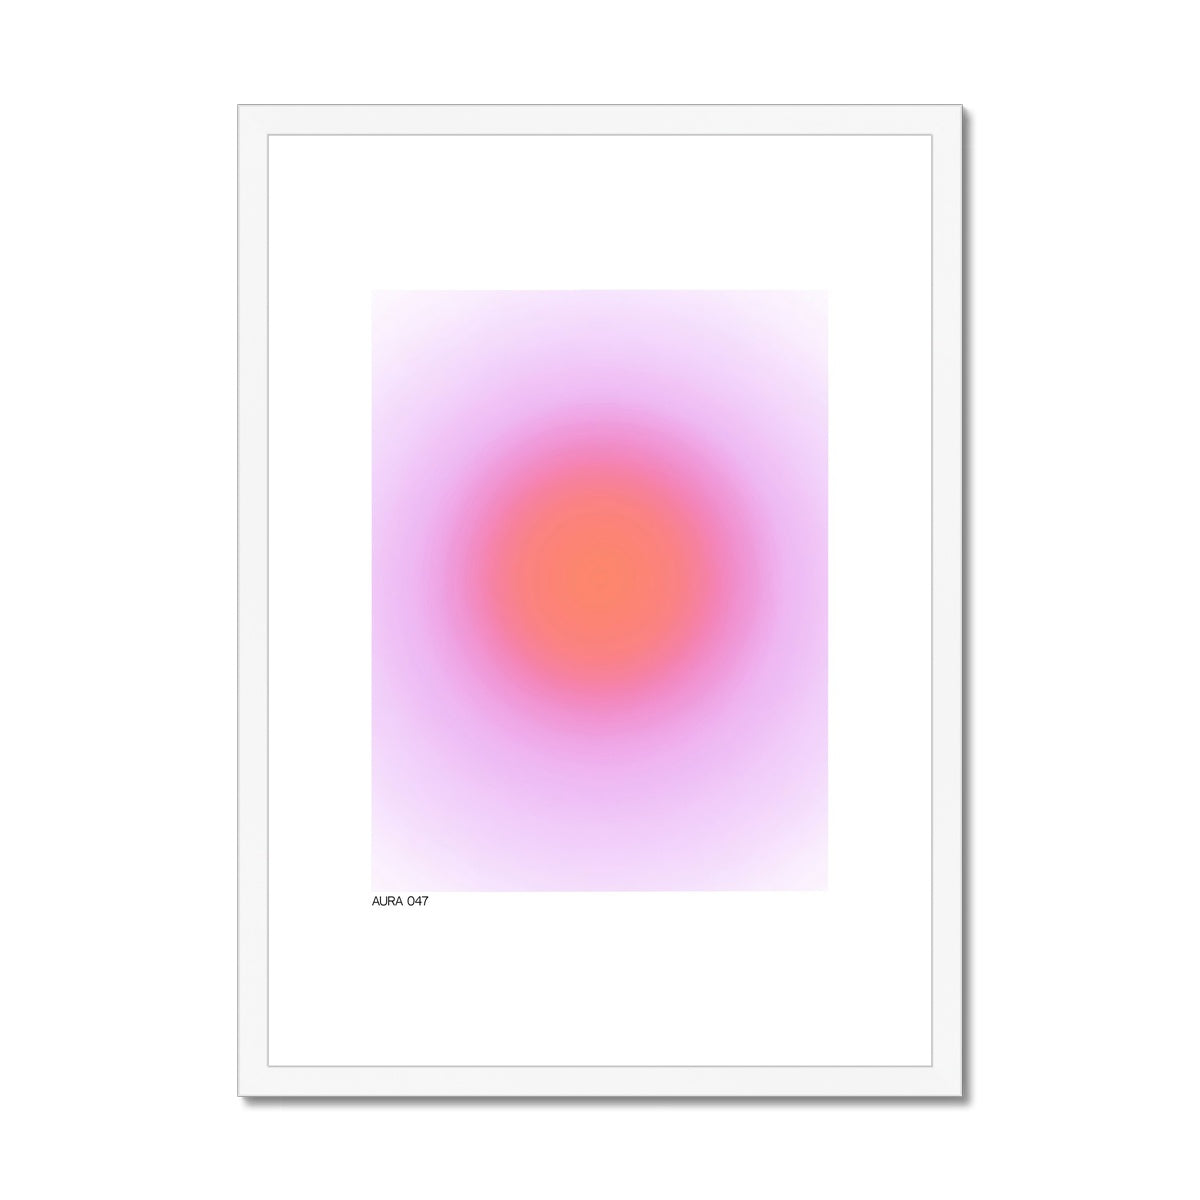 aura 047 Framed & Mounted Print